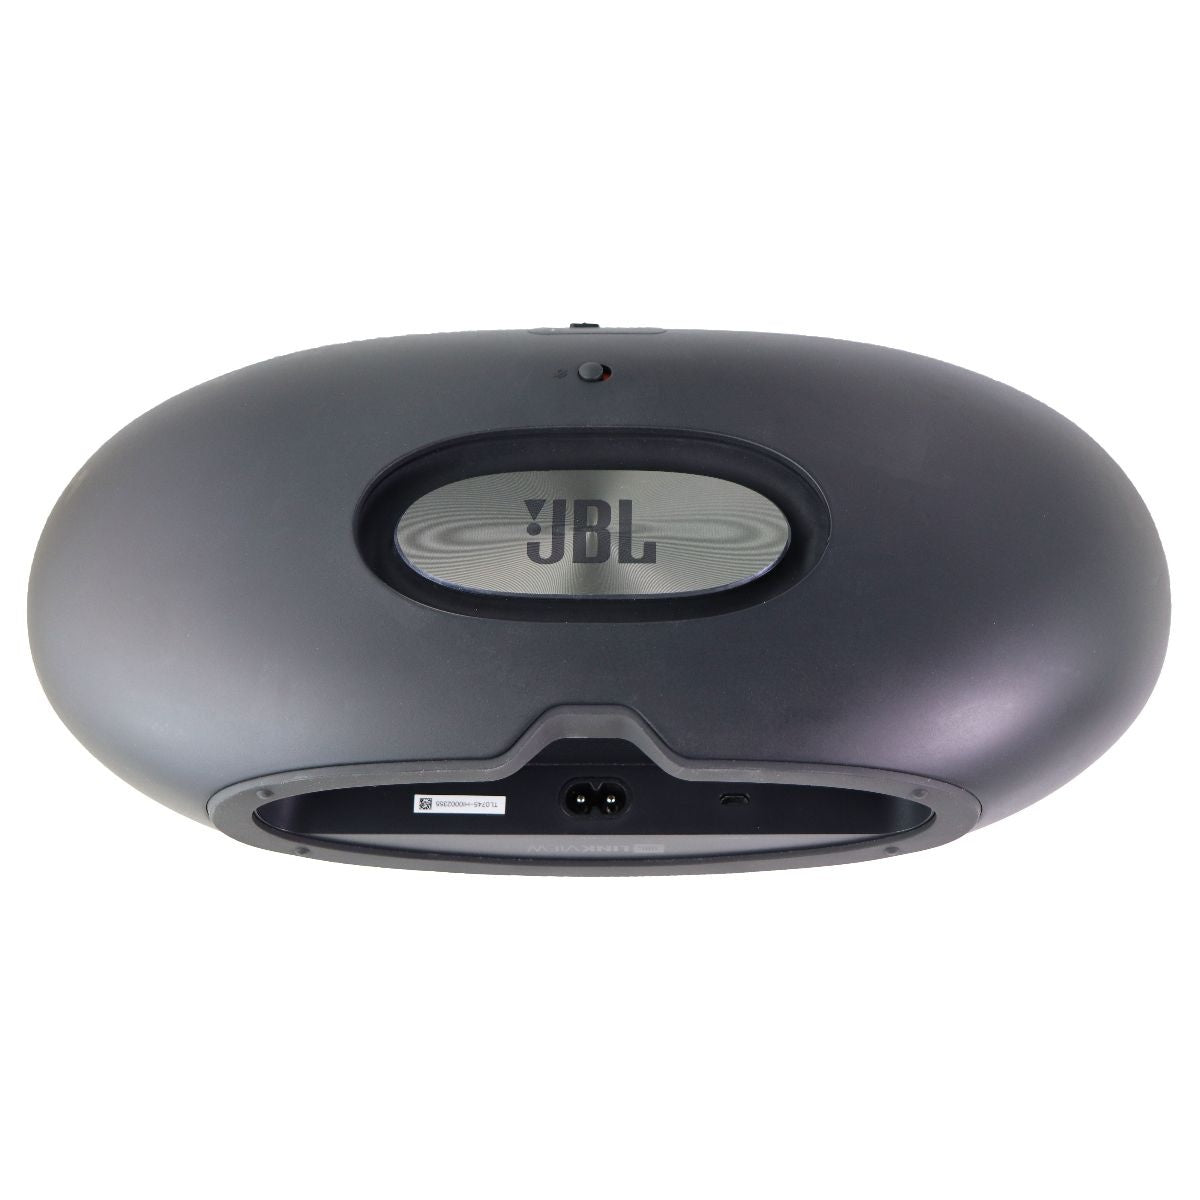 (DEMO MODEL) JBL Link View Portable Smart Speaker - Black Home Multimedia - Home Speakers & Subwoofers JBL    - Simple Cell Bulk Wholesale Pricing - USA Seller